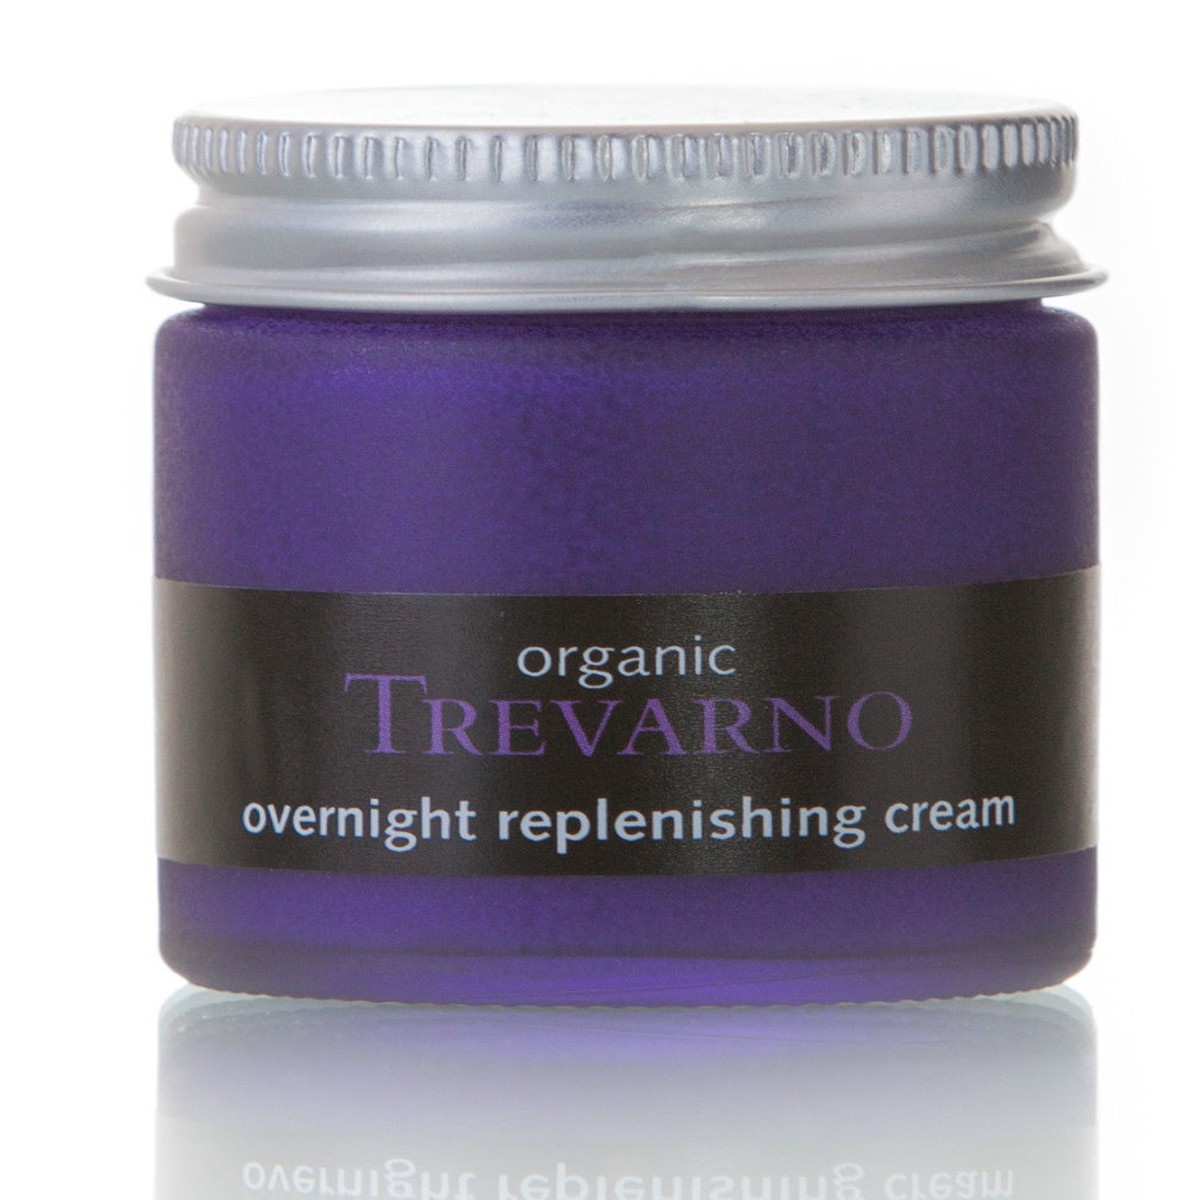 Organic Trevarno Overnight Replenishing Cream